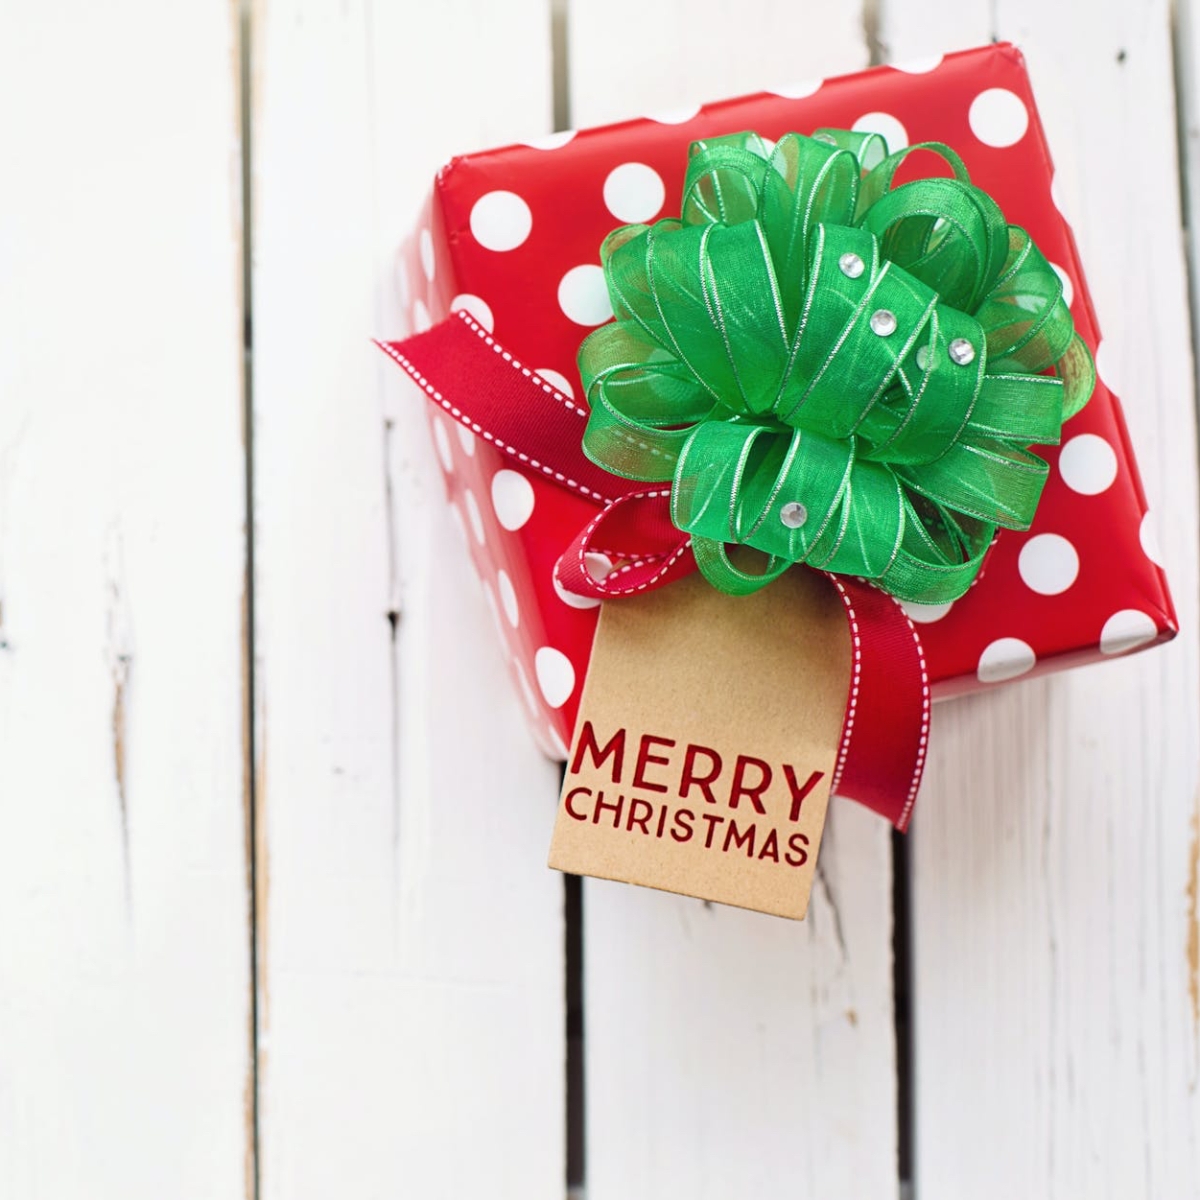 20 Christmas Gift Ideas for Older Loved Ones